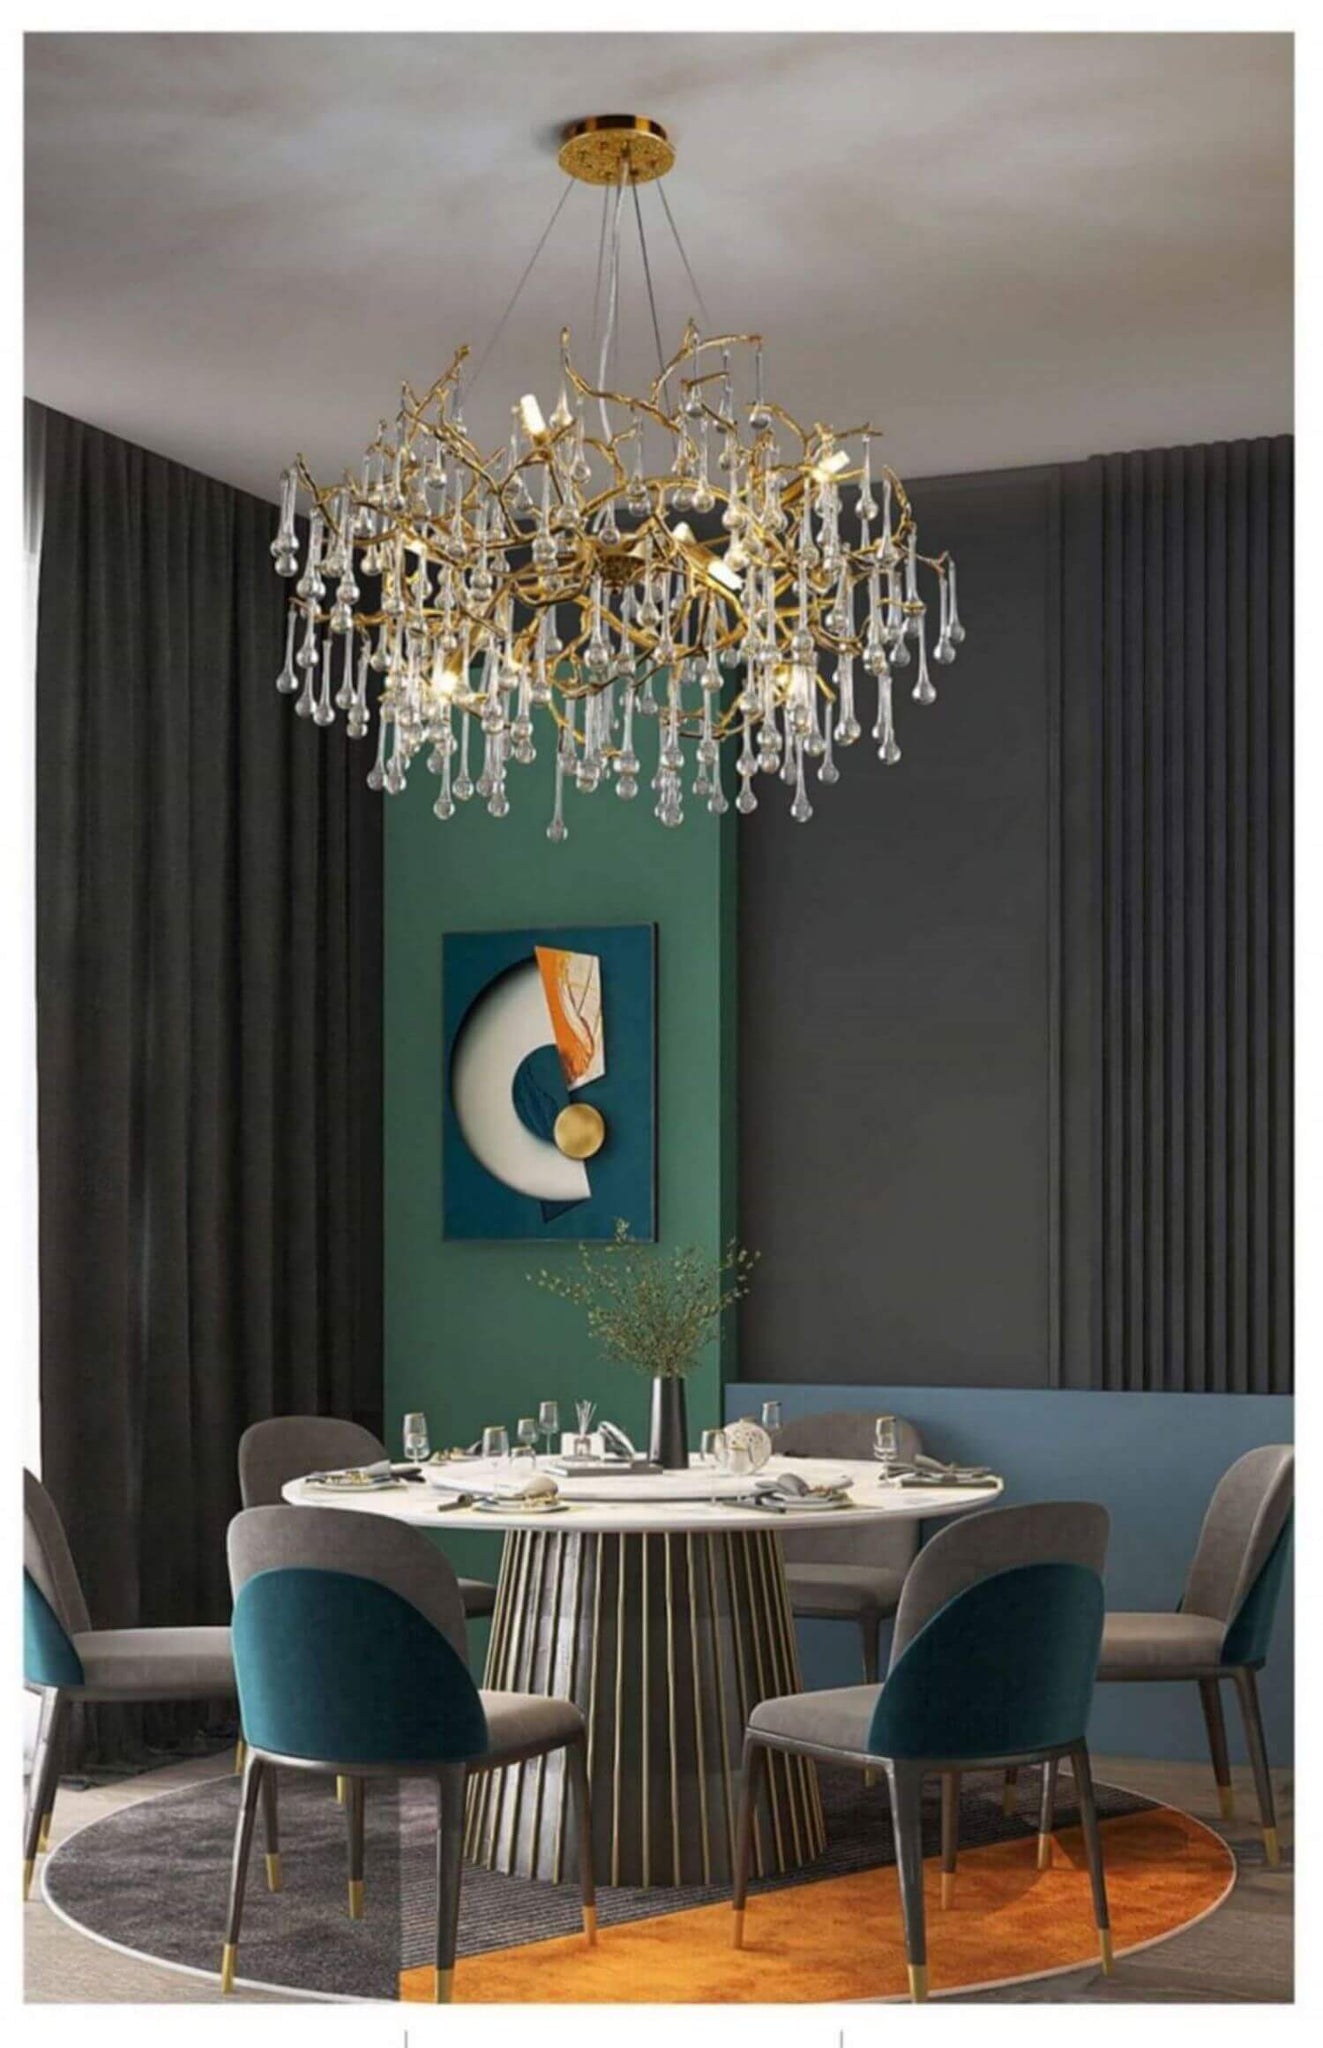 Creative Light Luxury Copper Living Room Dining Room Crystal Chandelier